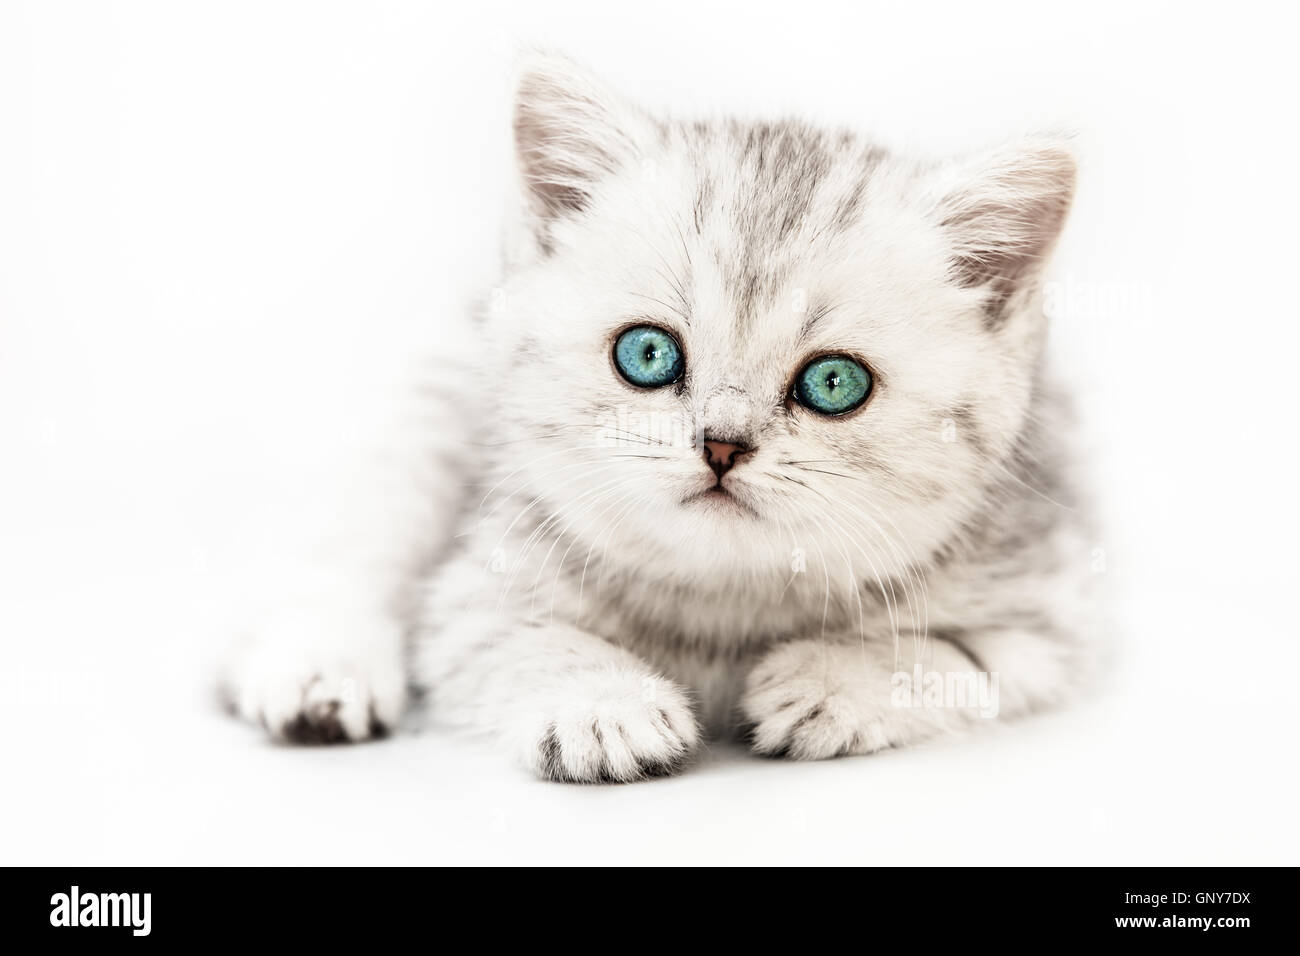 Little british domestic silver tabby cat Stock Photo